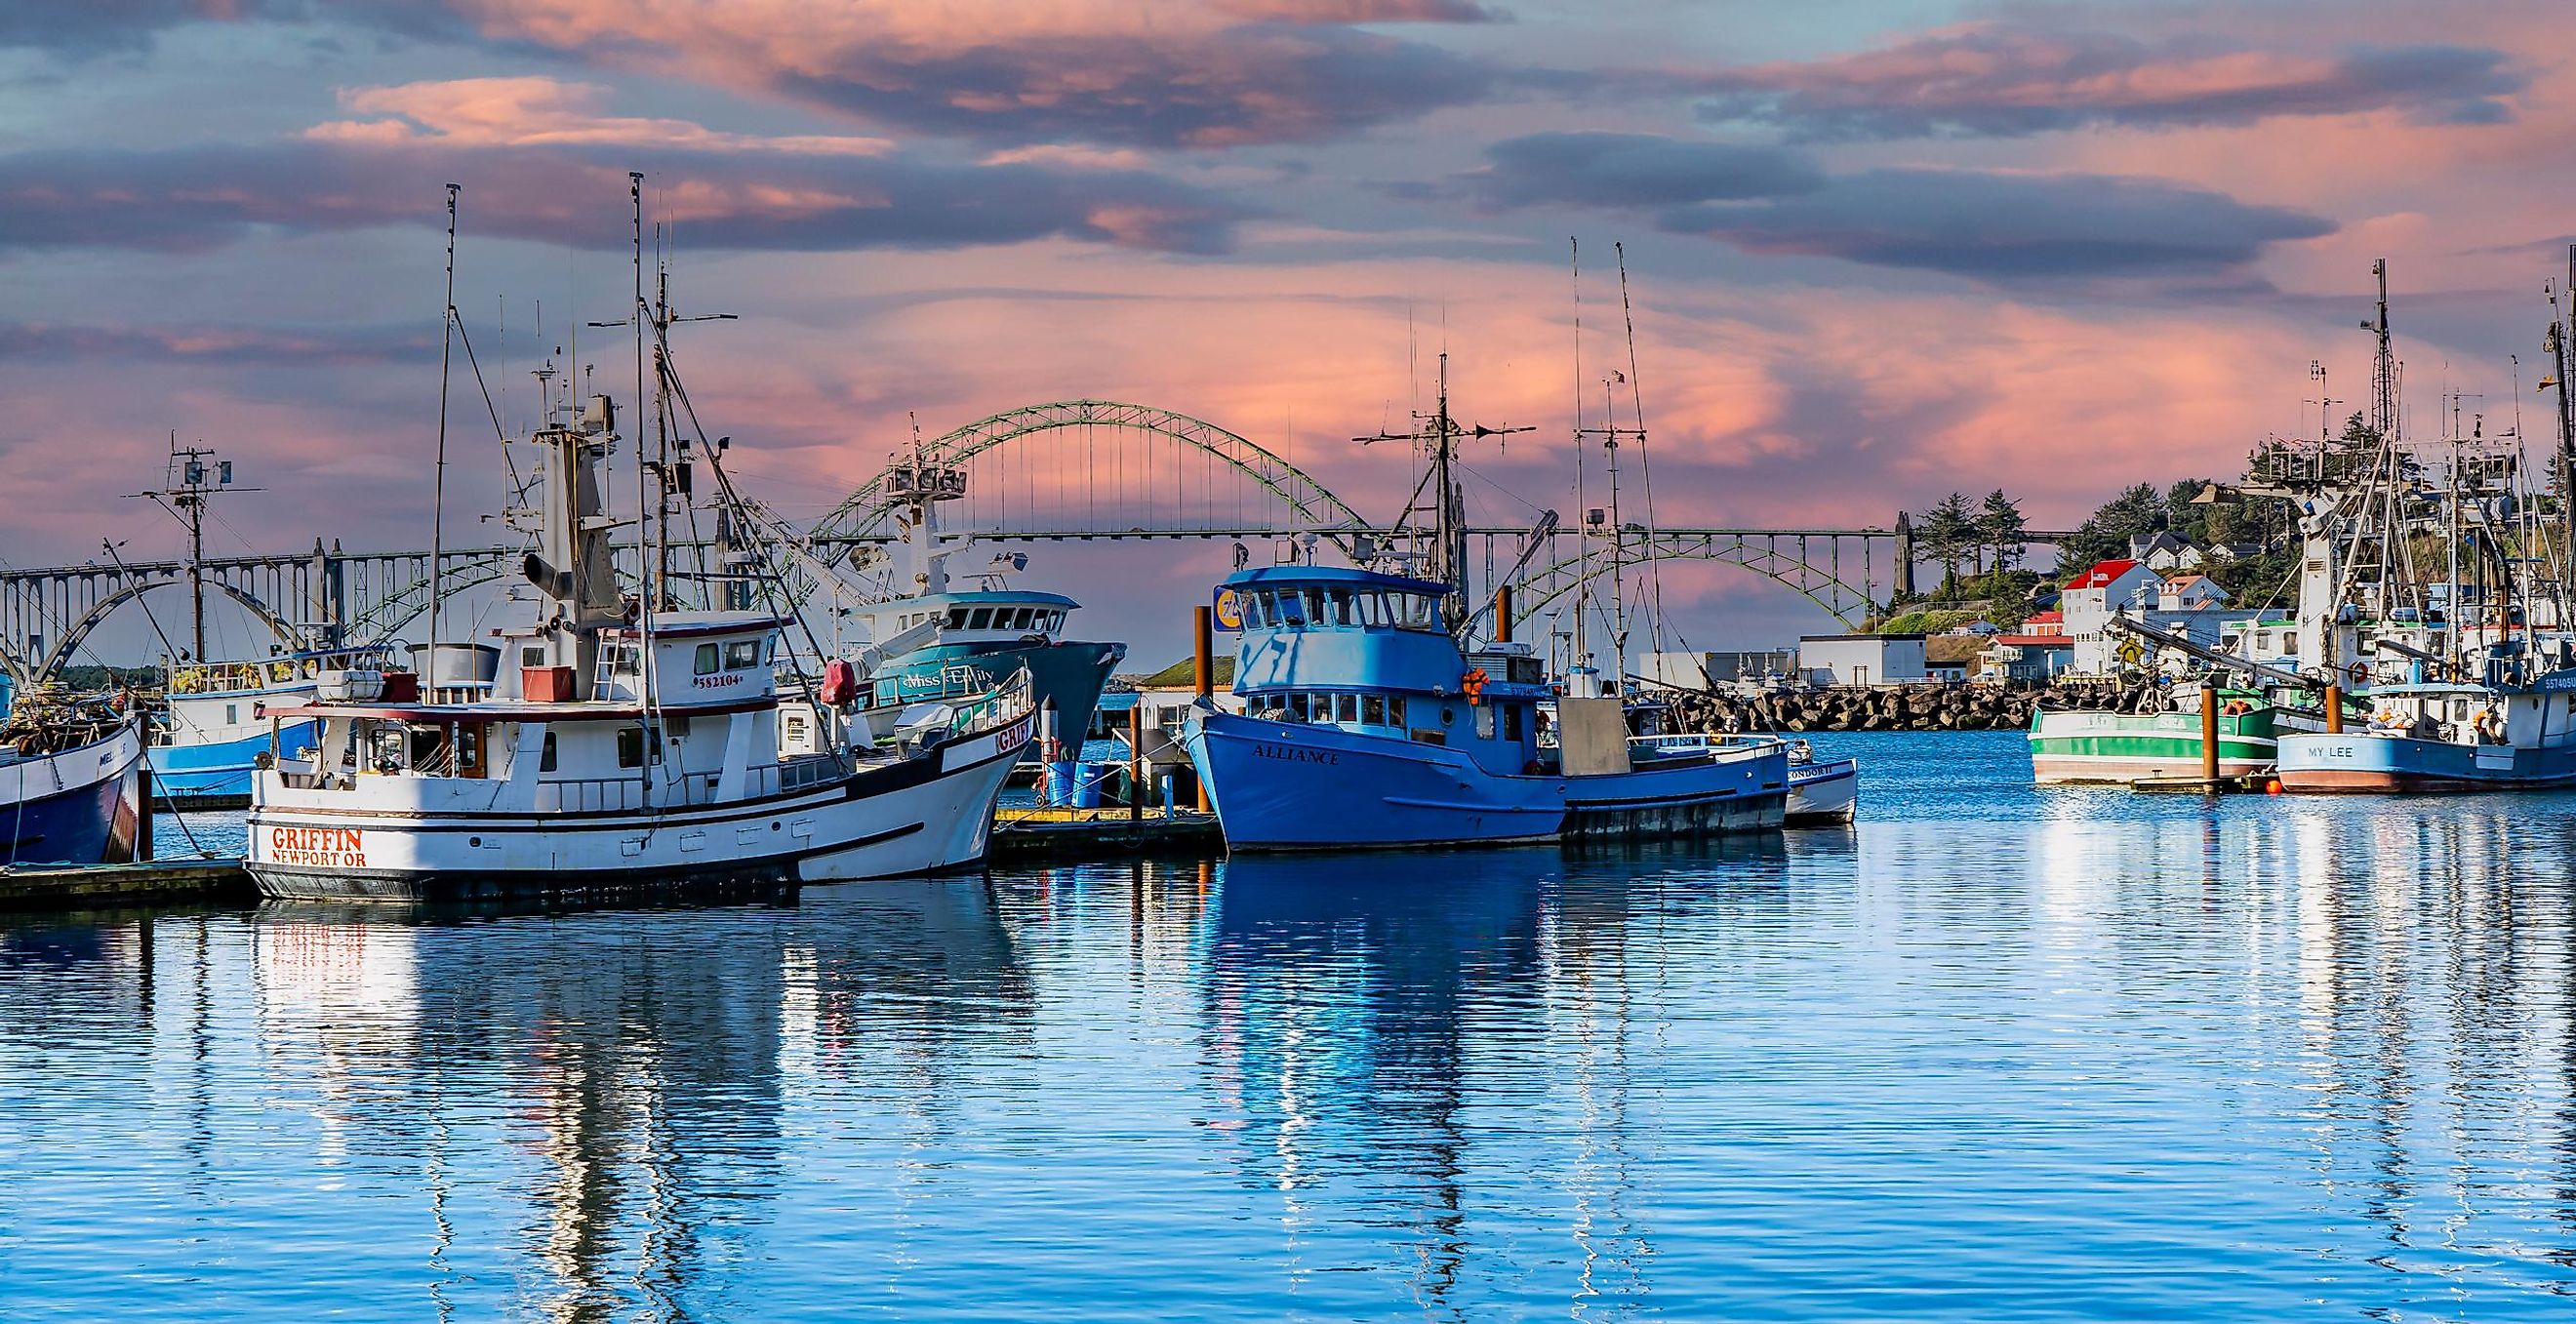 Sunset in harbor at Newport Oregon - Bob Pool / Shutterstock.com